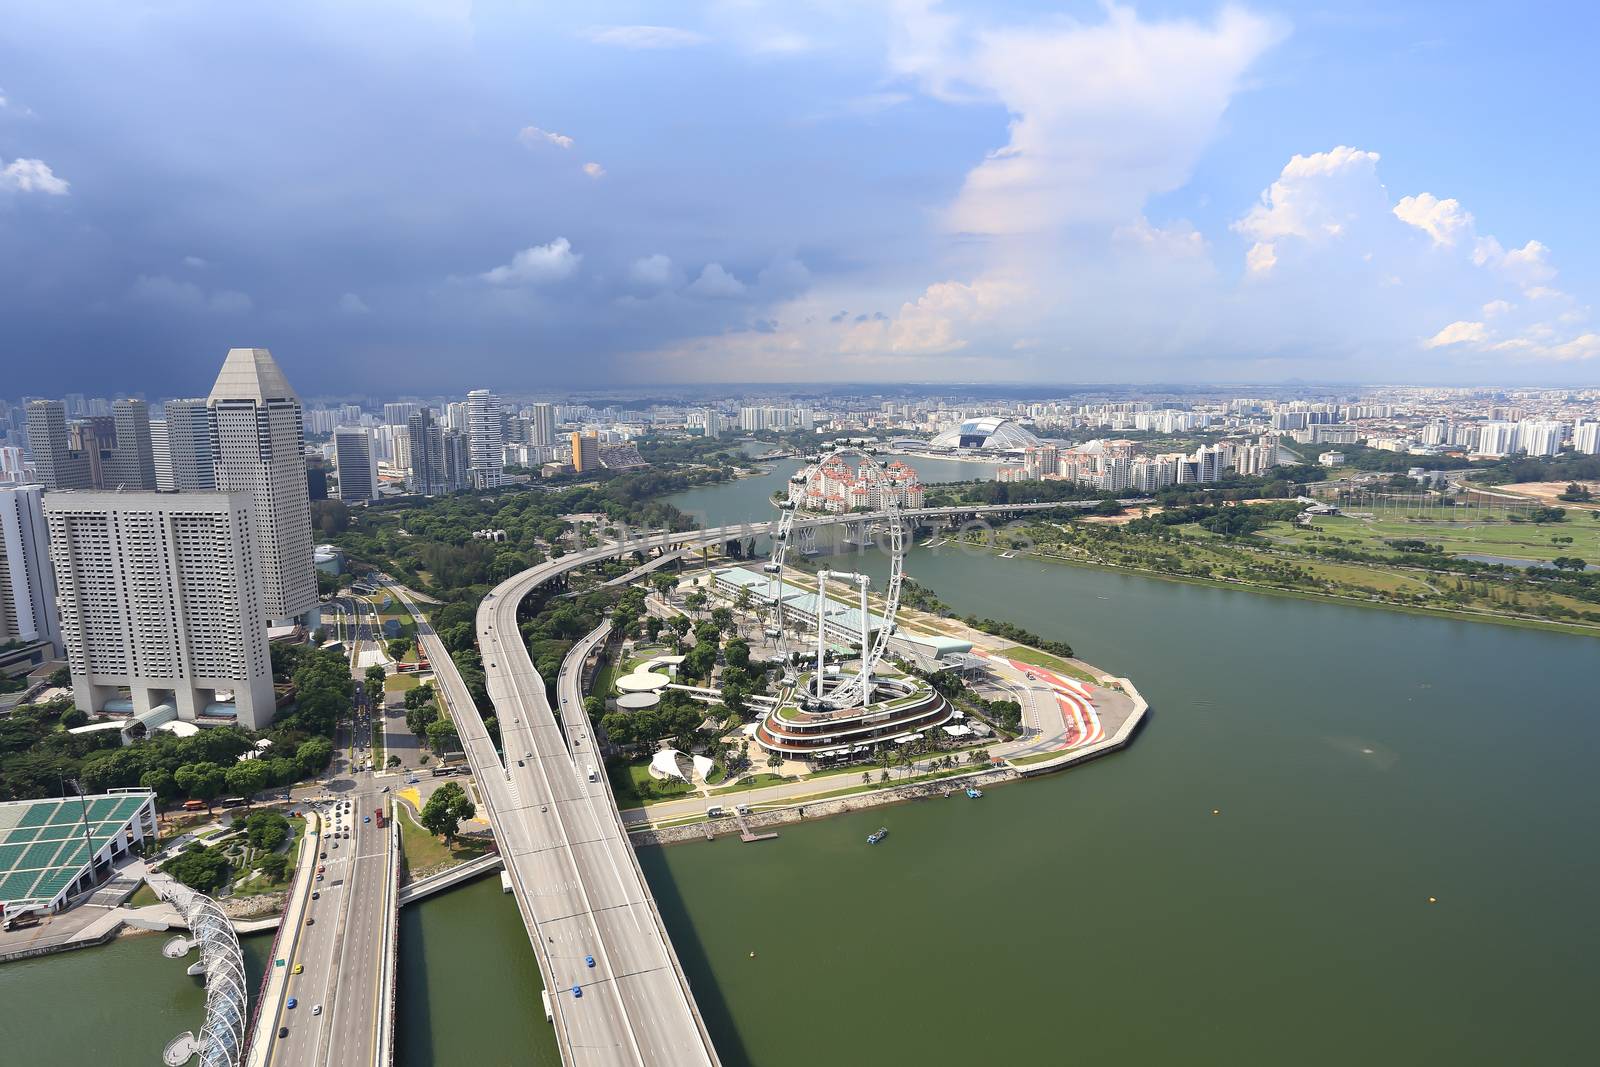 Bird's eye view of Singapore by rufous